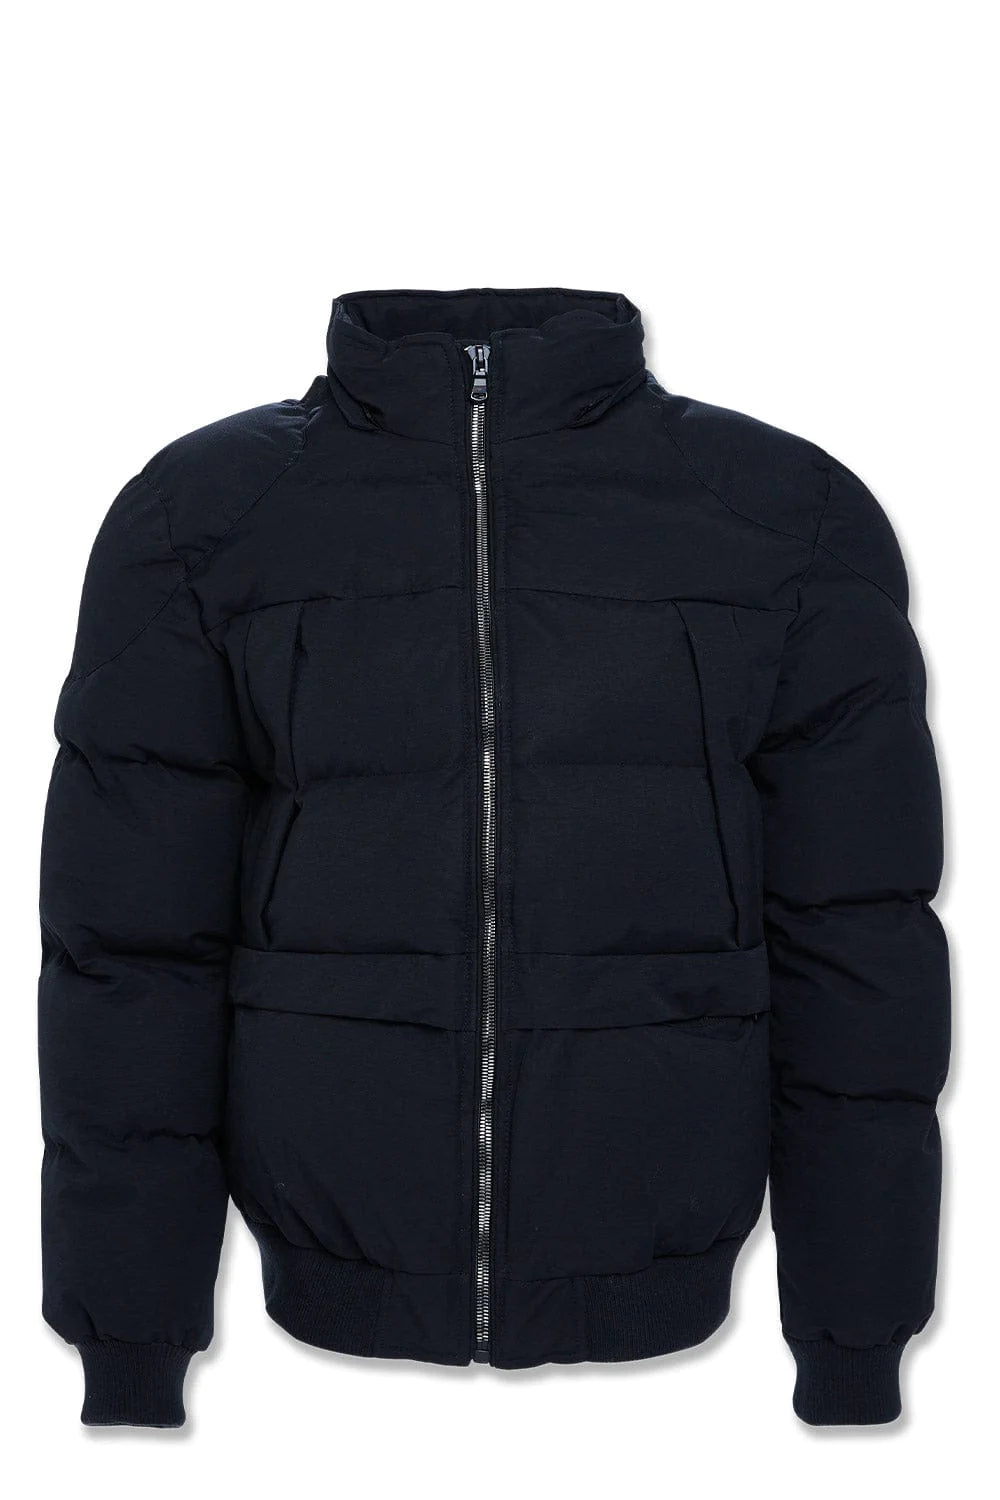 Fossa Apparel 1585 - Men's Brooklyn Bomber Jacket $69.02 - Outerwear